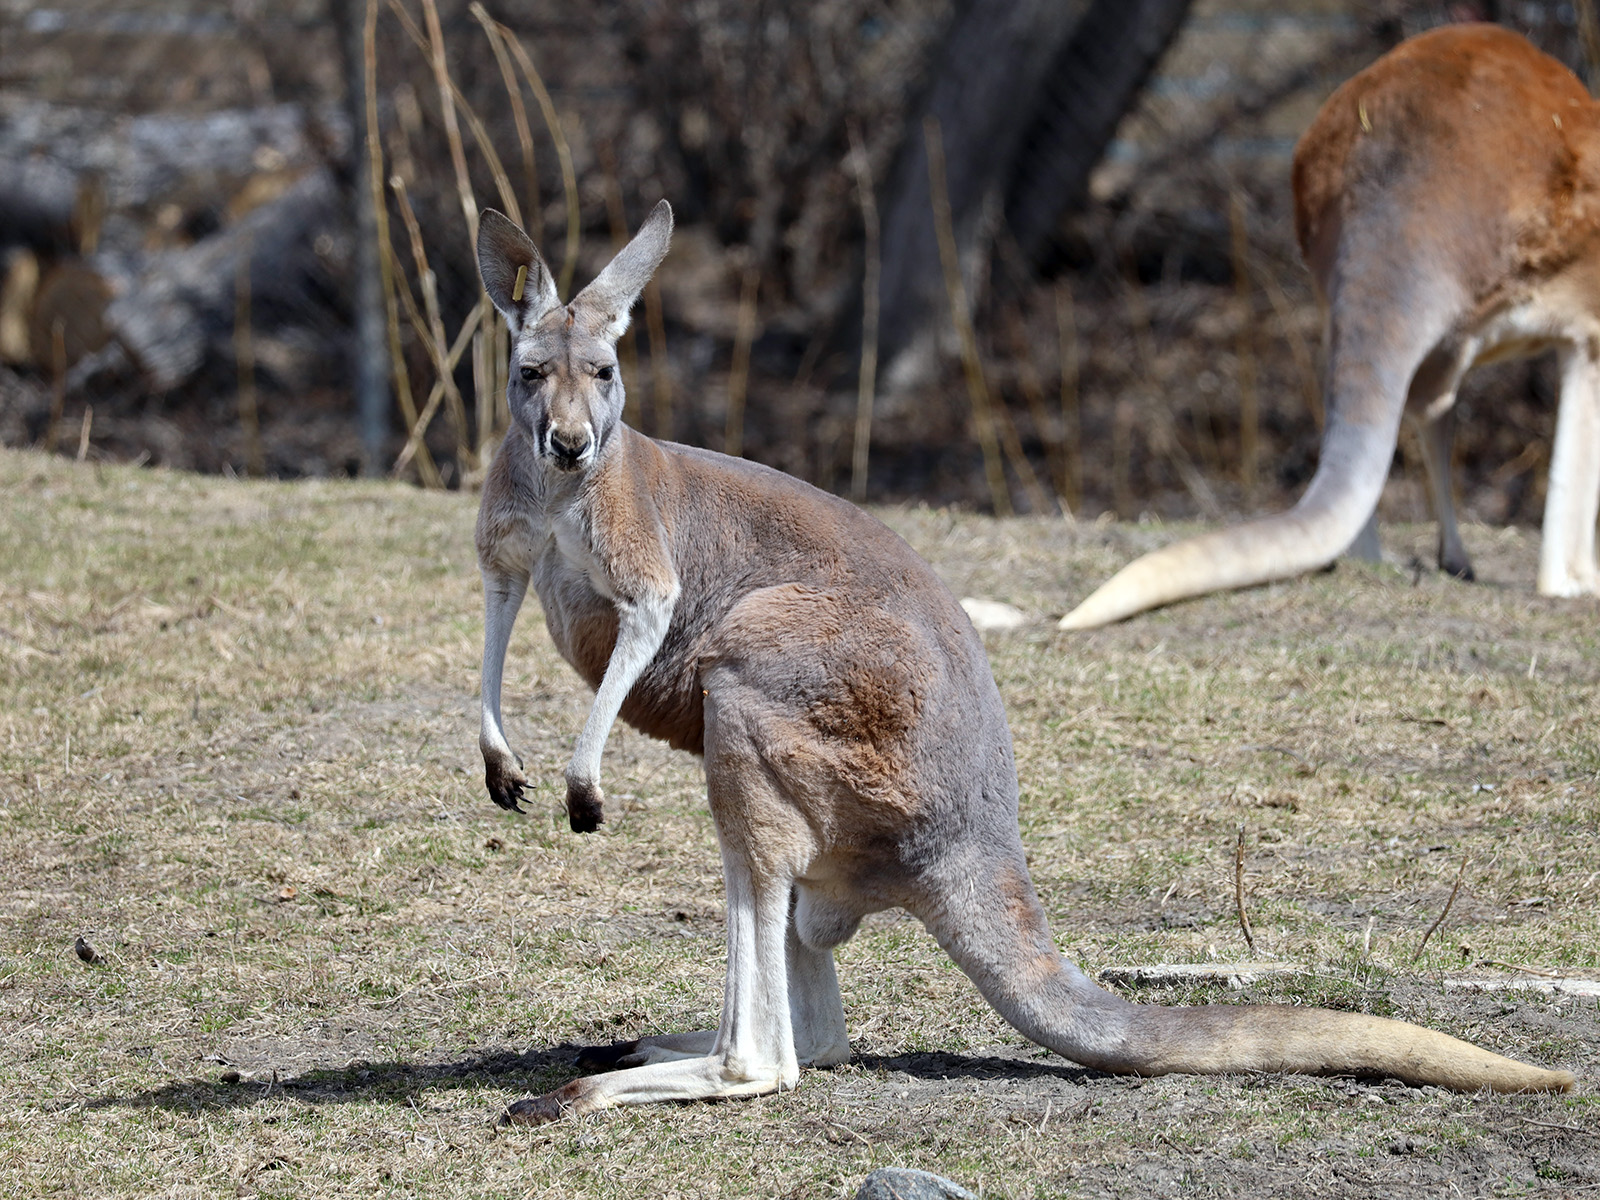 Kangaroo.jpg (762 KB)